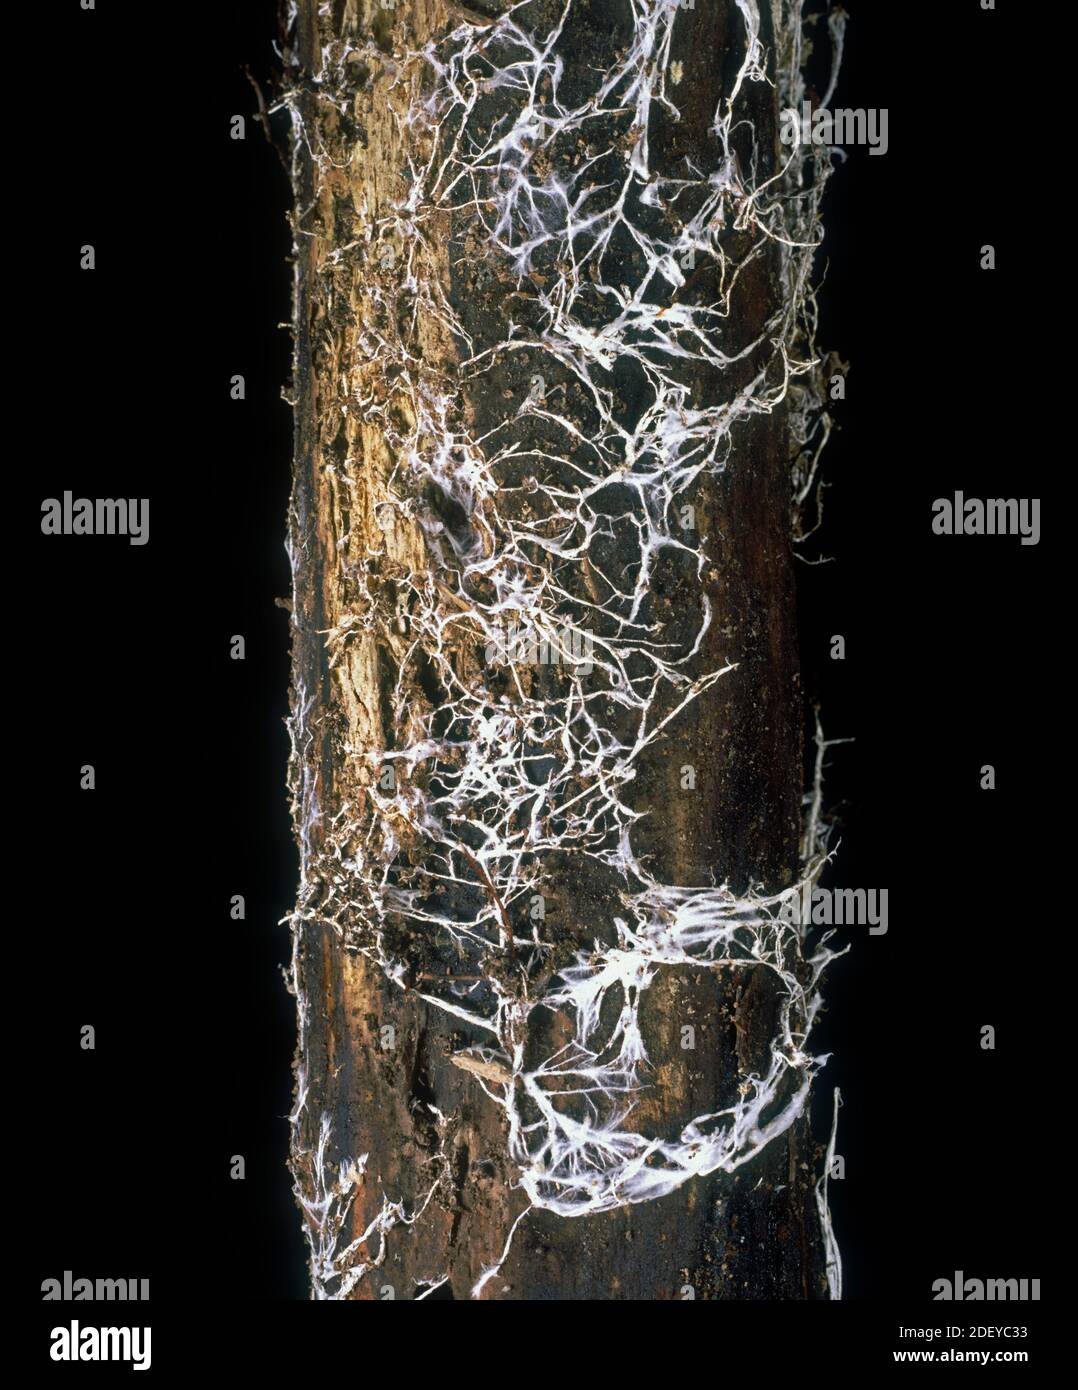 Honey fungus (Armillaria mellea) fungal disease growing white mycelium under the bark of oak (Quercus sp.) tree wood Stock Photo